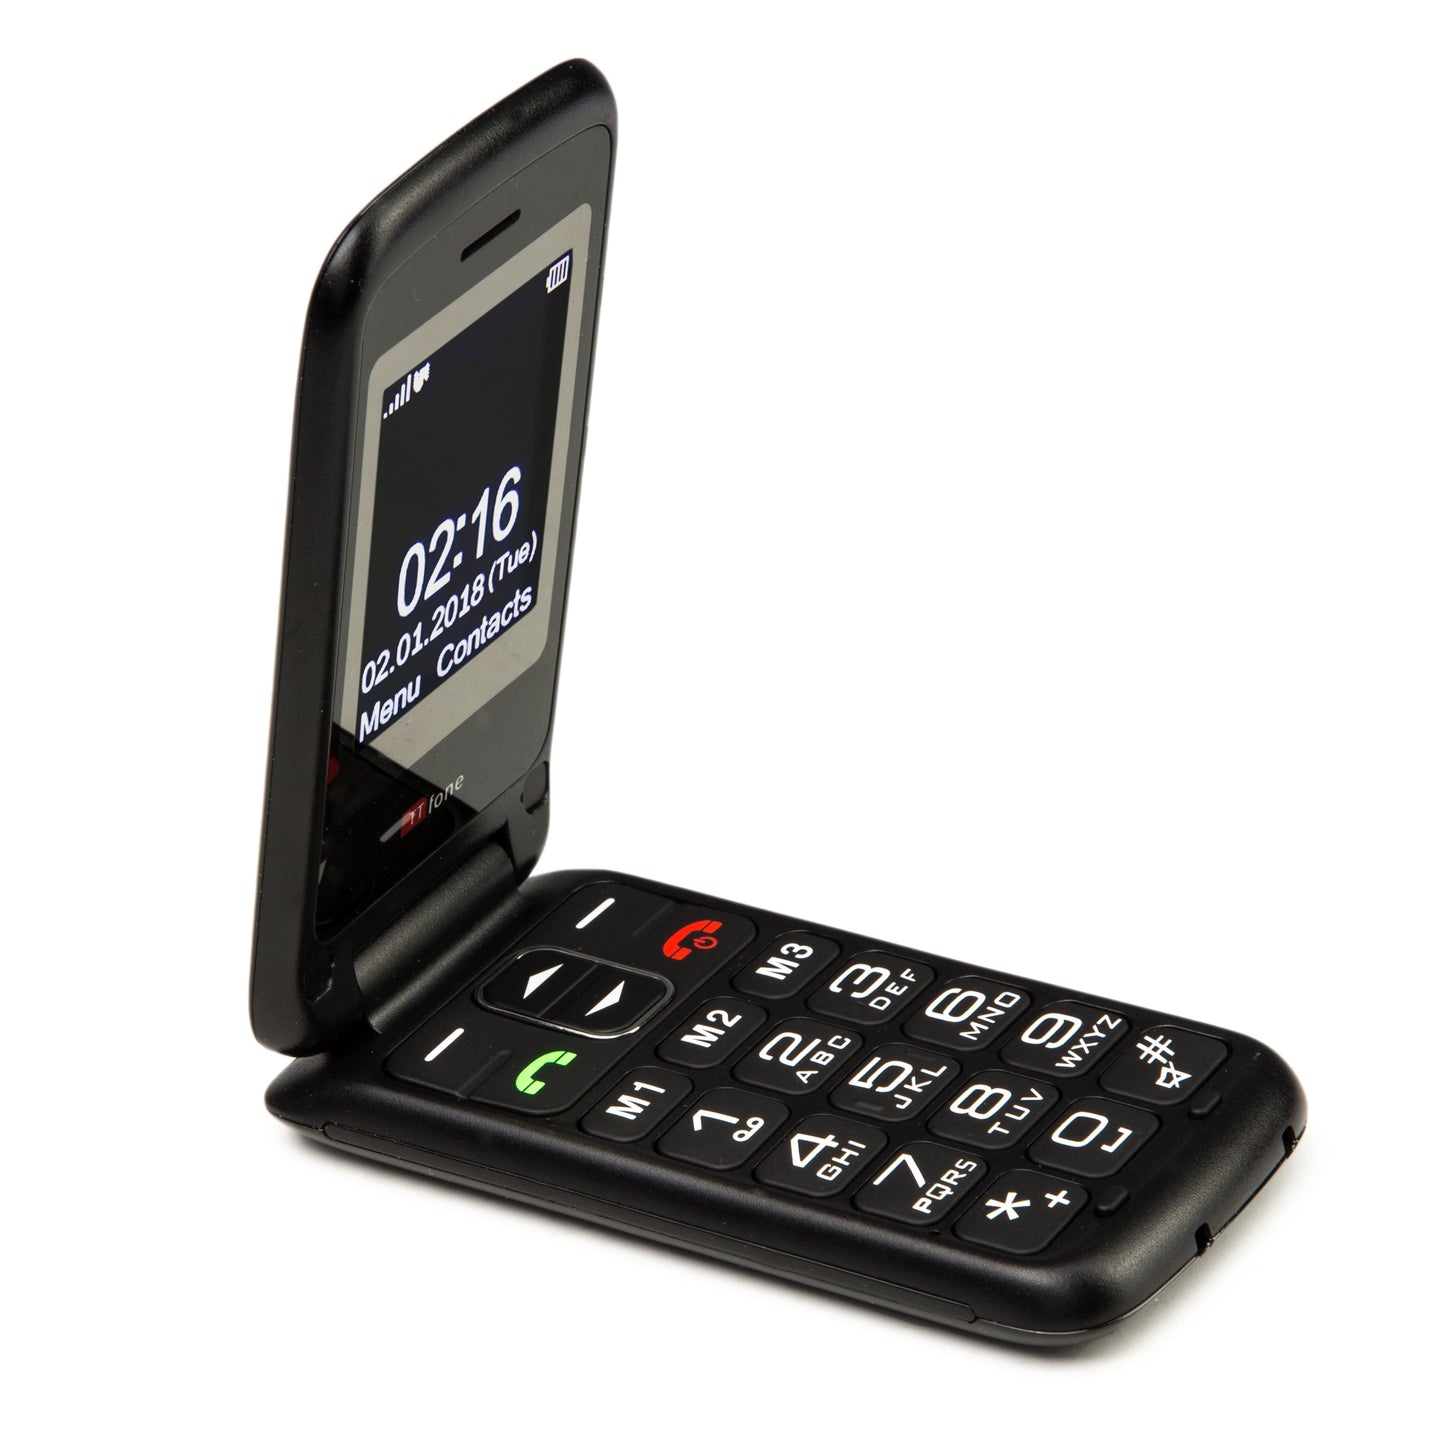 TTfone Nova TT650 No Dock Charger - Warehouse Deals with Vodafone Pay As You Go Sim Card